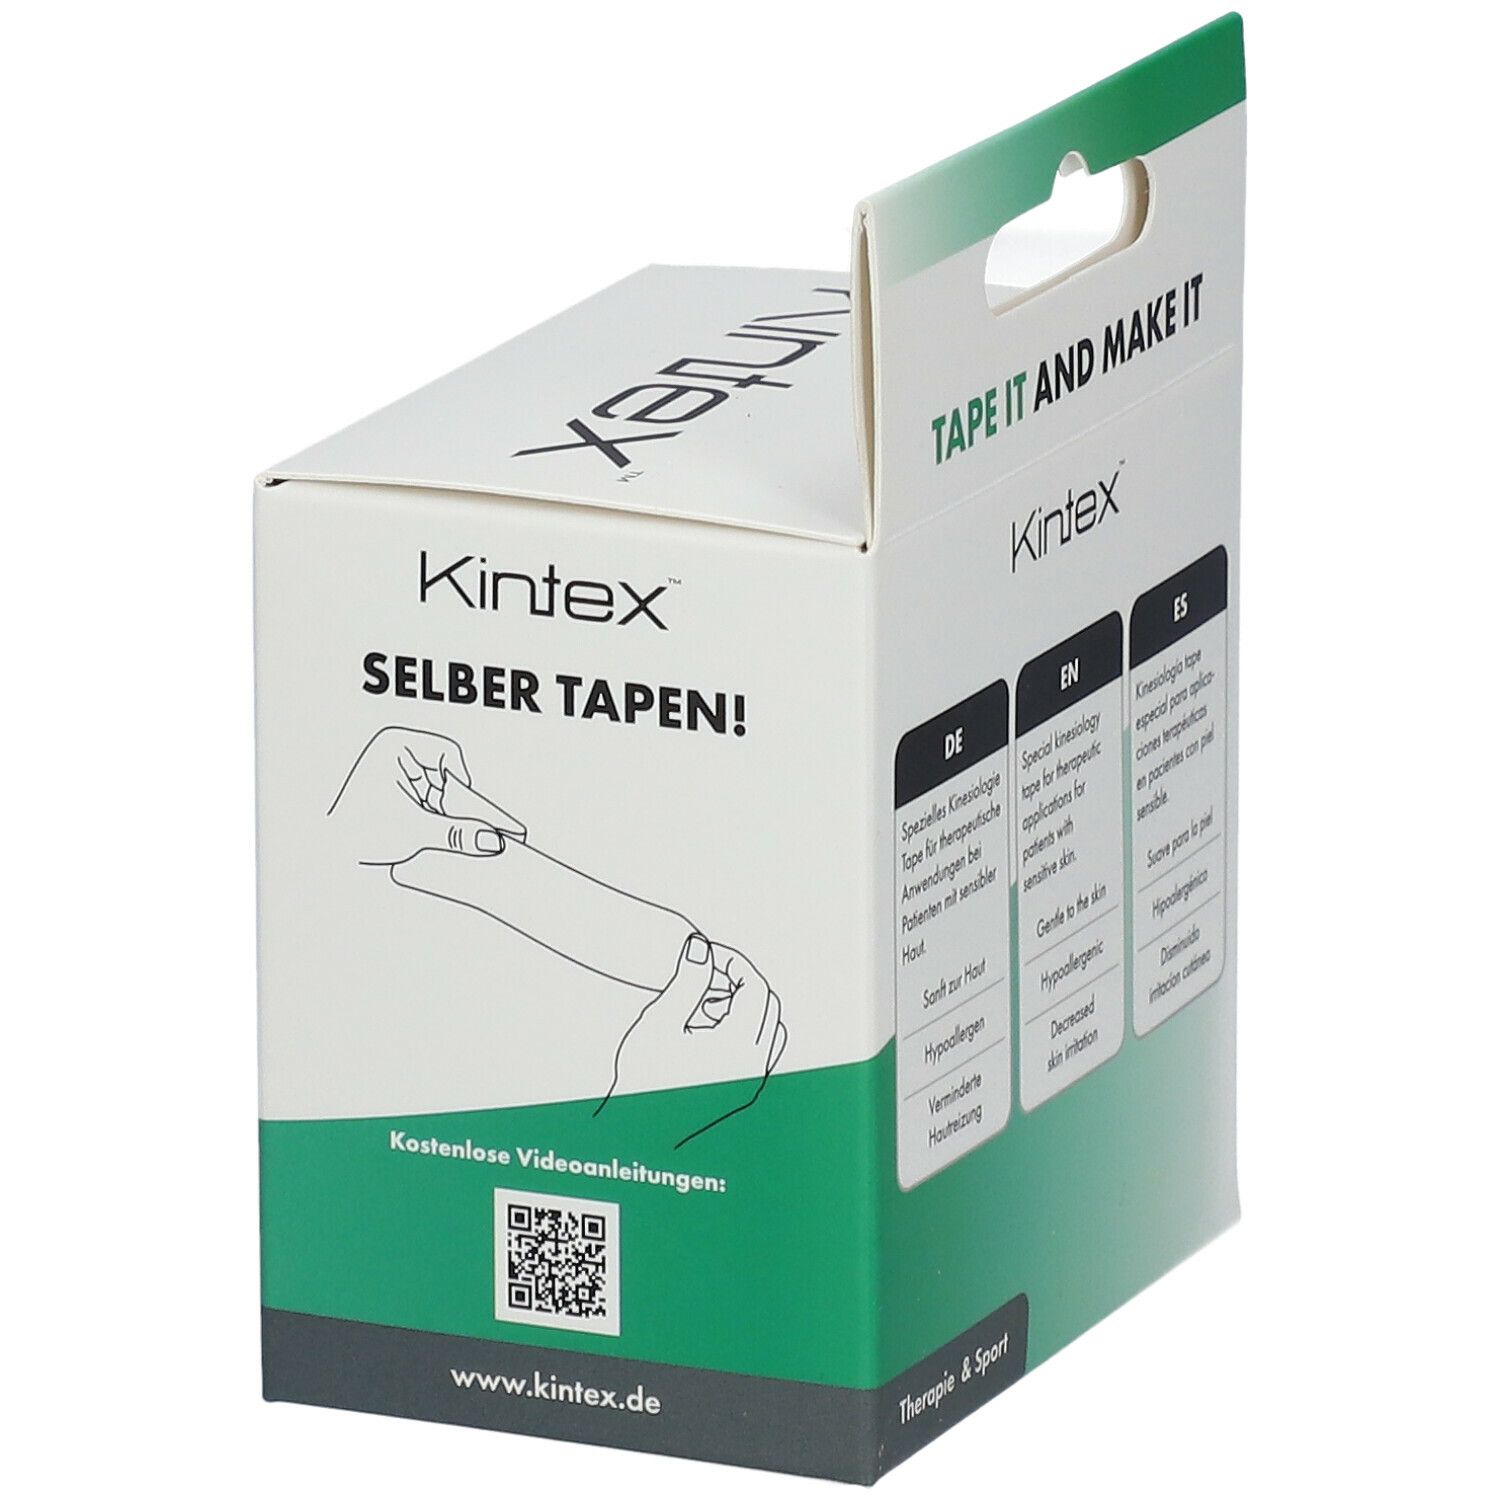 Kintex™ Kinesiology Tape Sensitive 5 x 5 cm